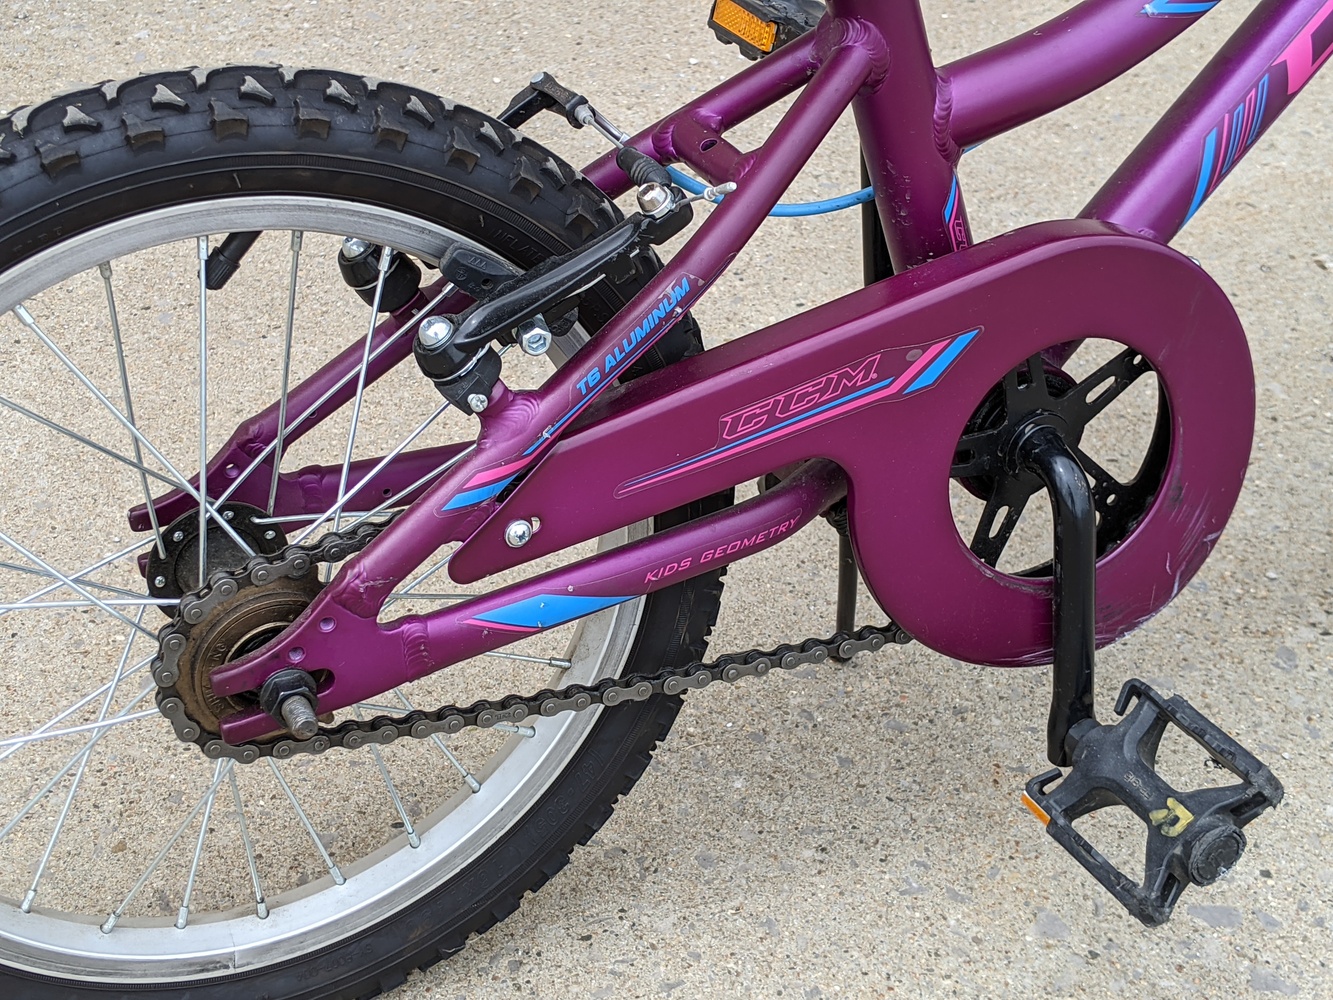 CCM Flow Kids Youth Bike, Purple, 16-inch